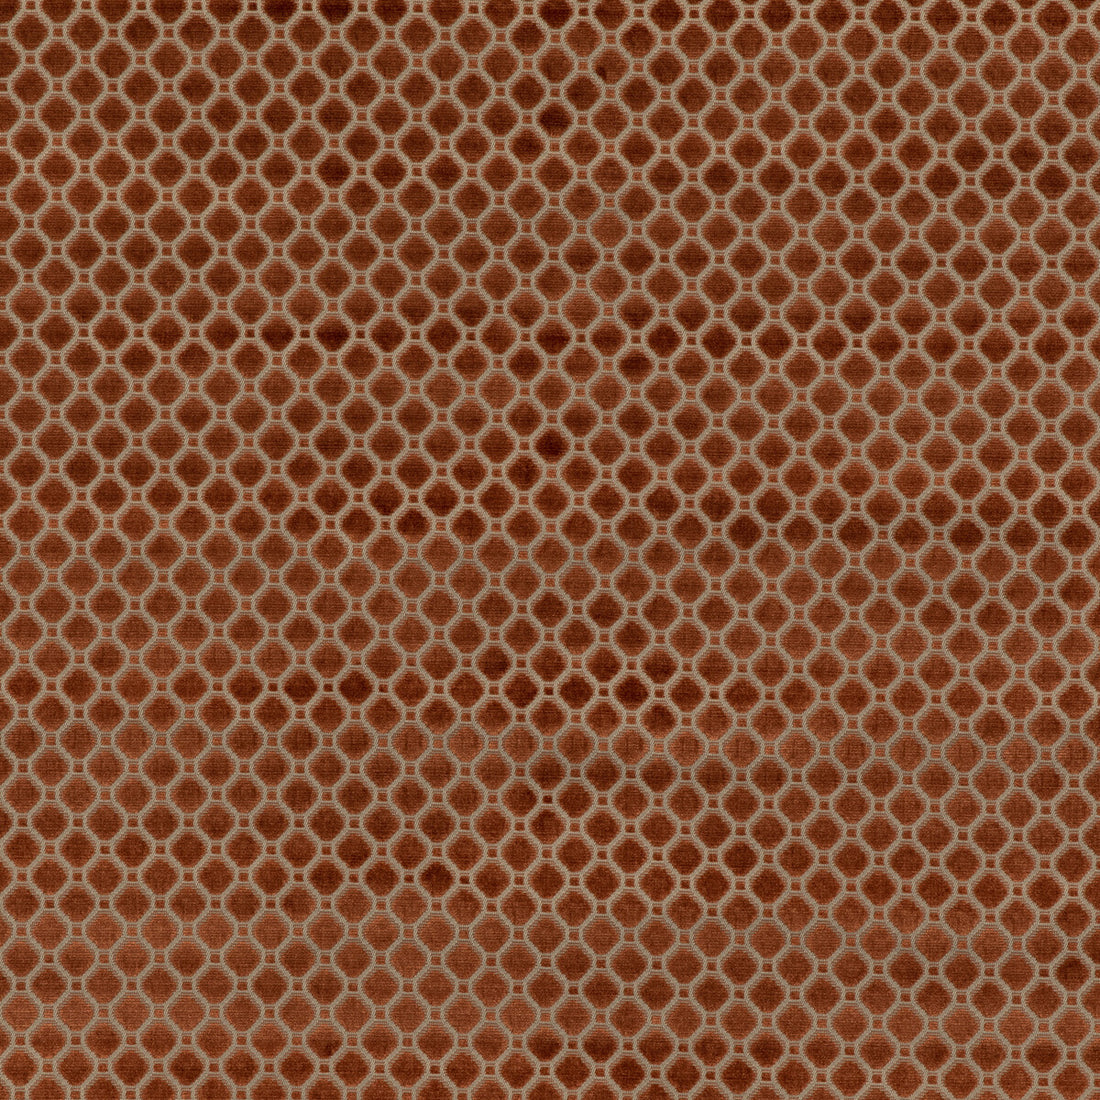 Indus Velvet fabric in sienna color - pattern BF10826.338.0 - by G P &amp; J Baker in the Coromandel Velvets collection